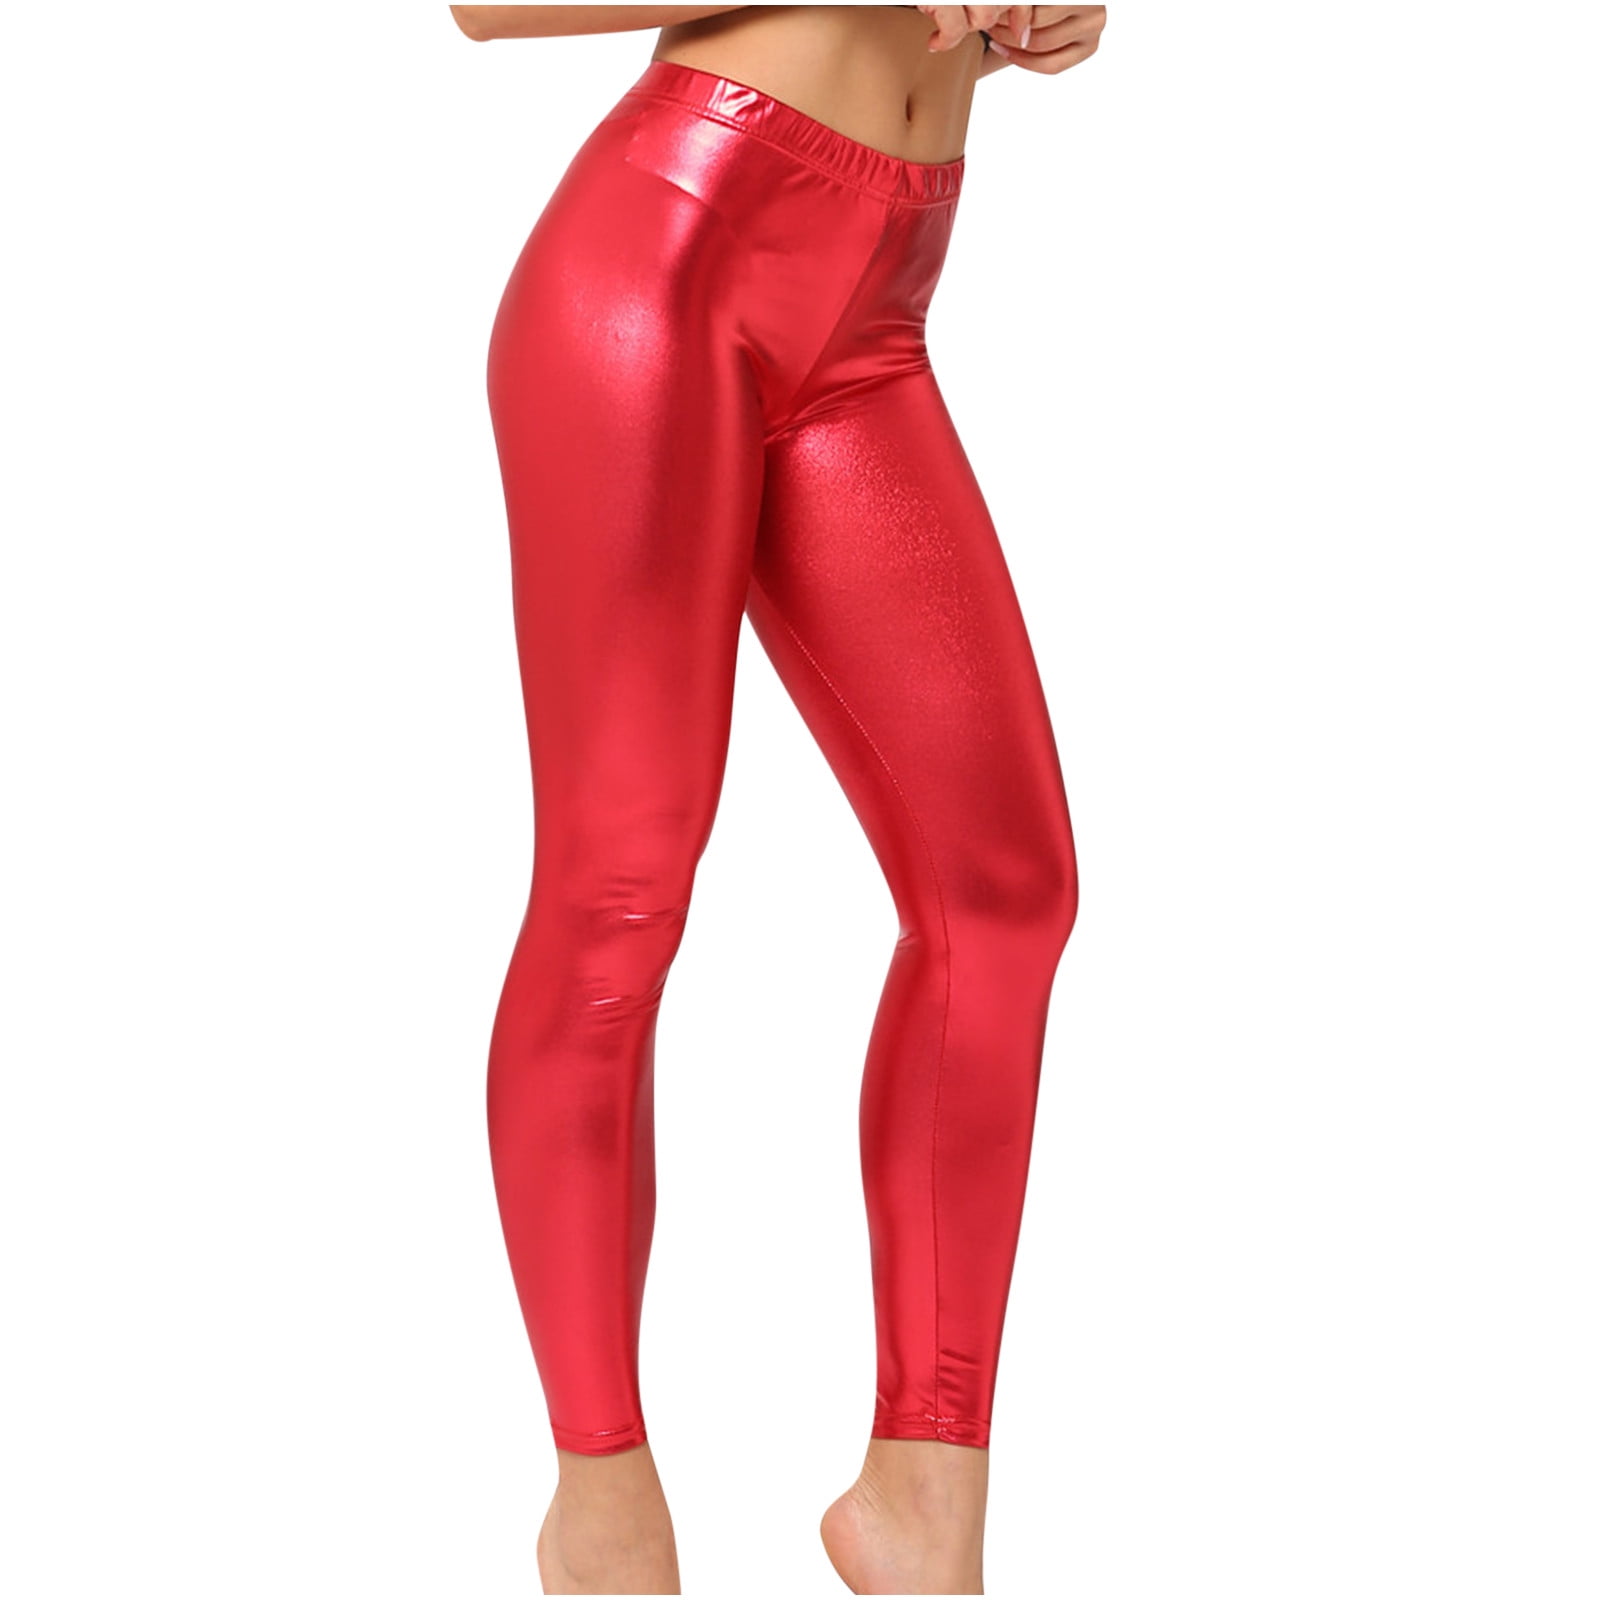 YYDGH Women's Shiny Metallic Leggings Sexy High Gloss Skinny Pants